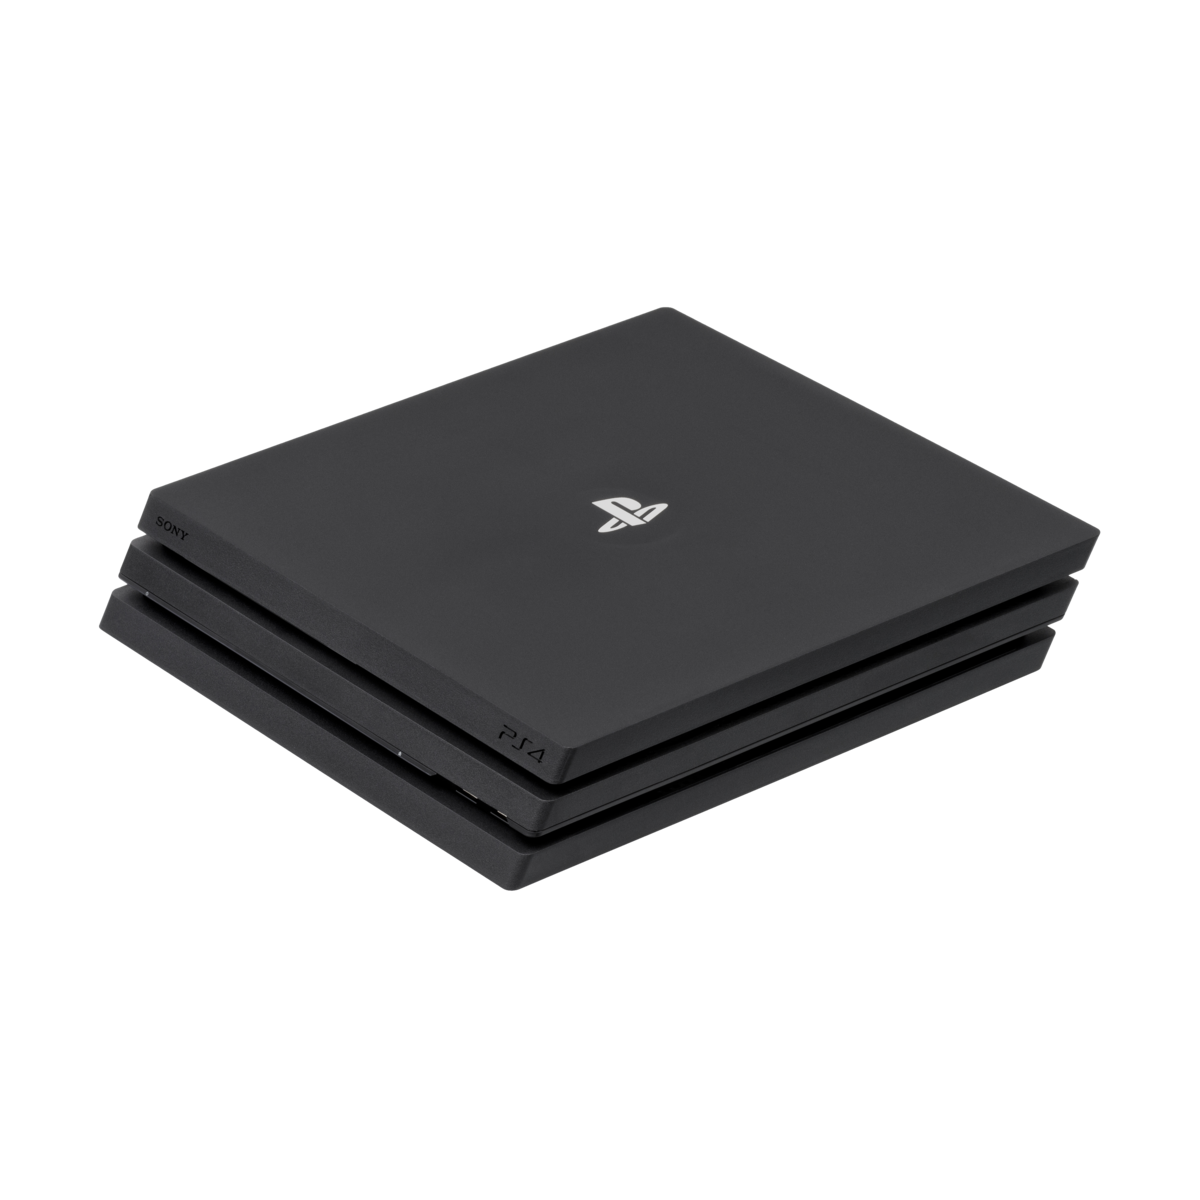 Sony PlayStation 4 Pro Console, Black (1TB) - Pristine Condition